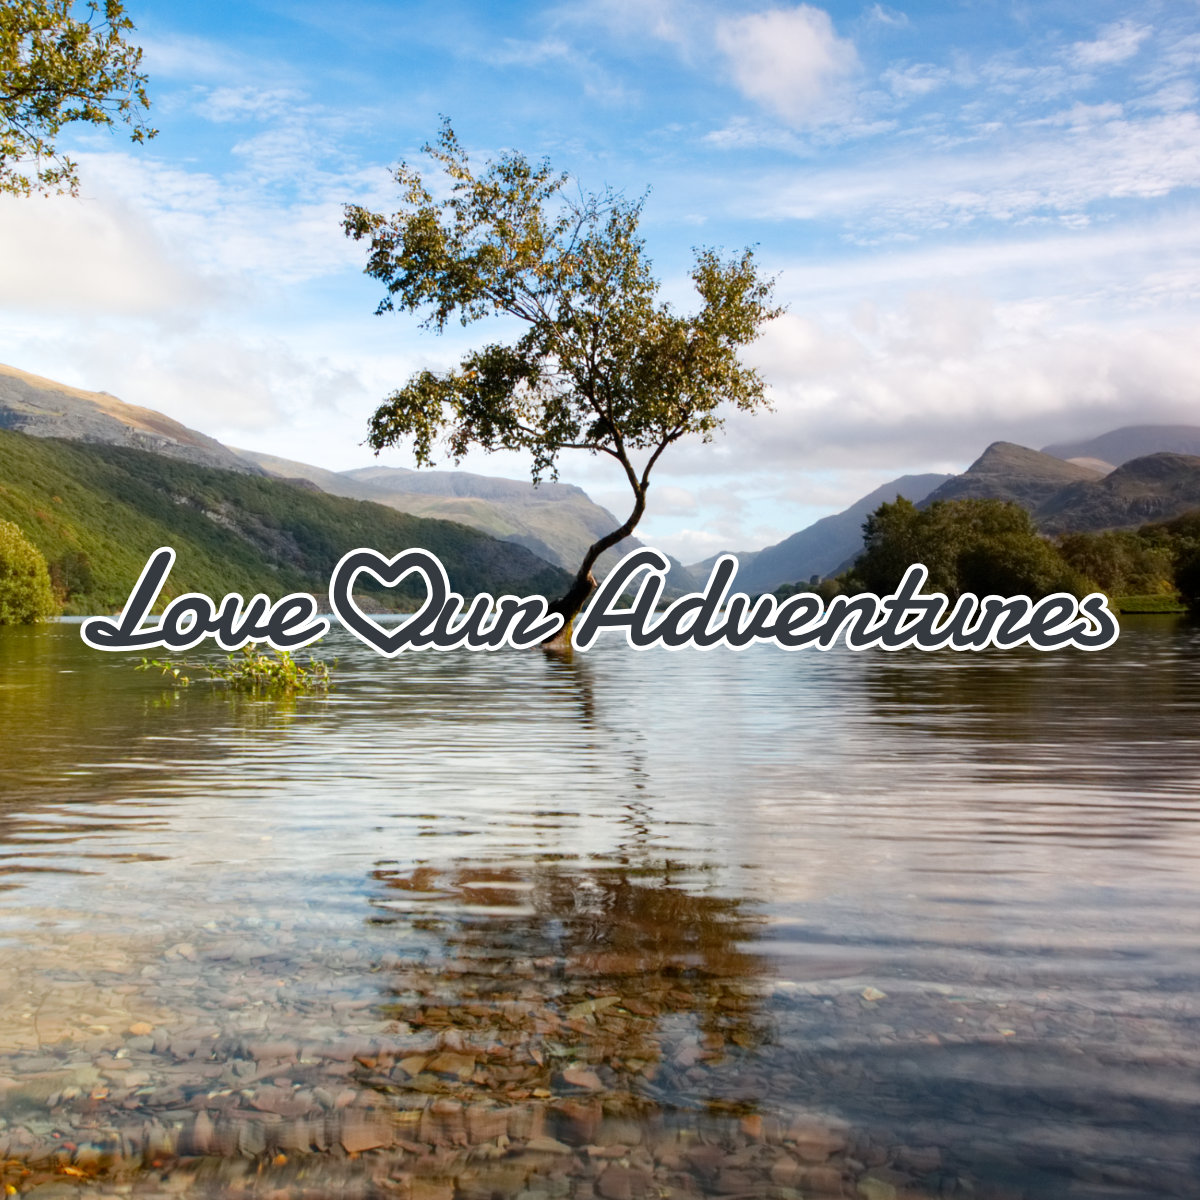 (c) Loveouradventures.com